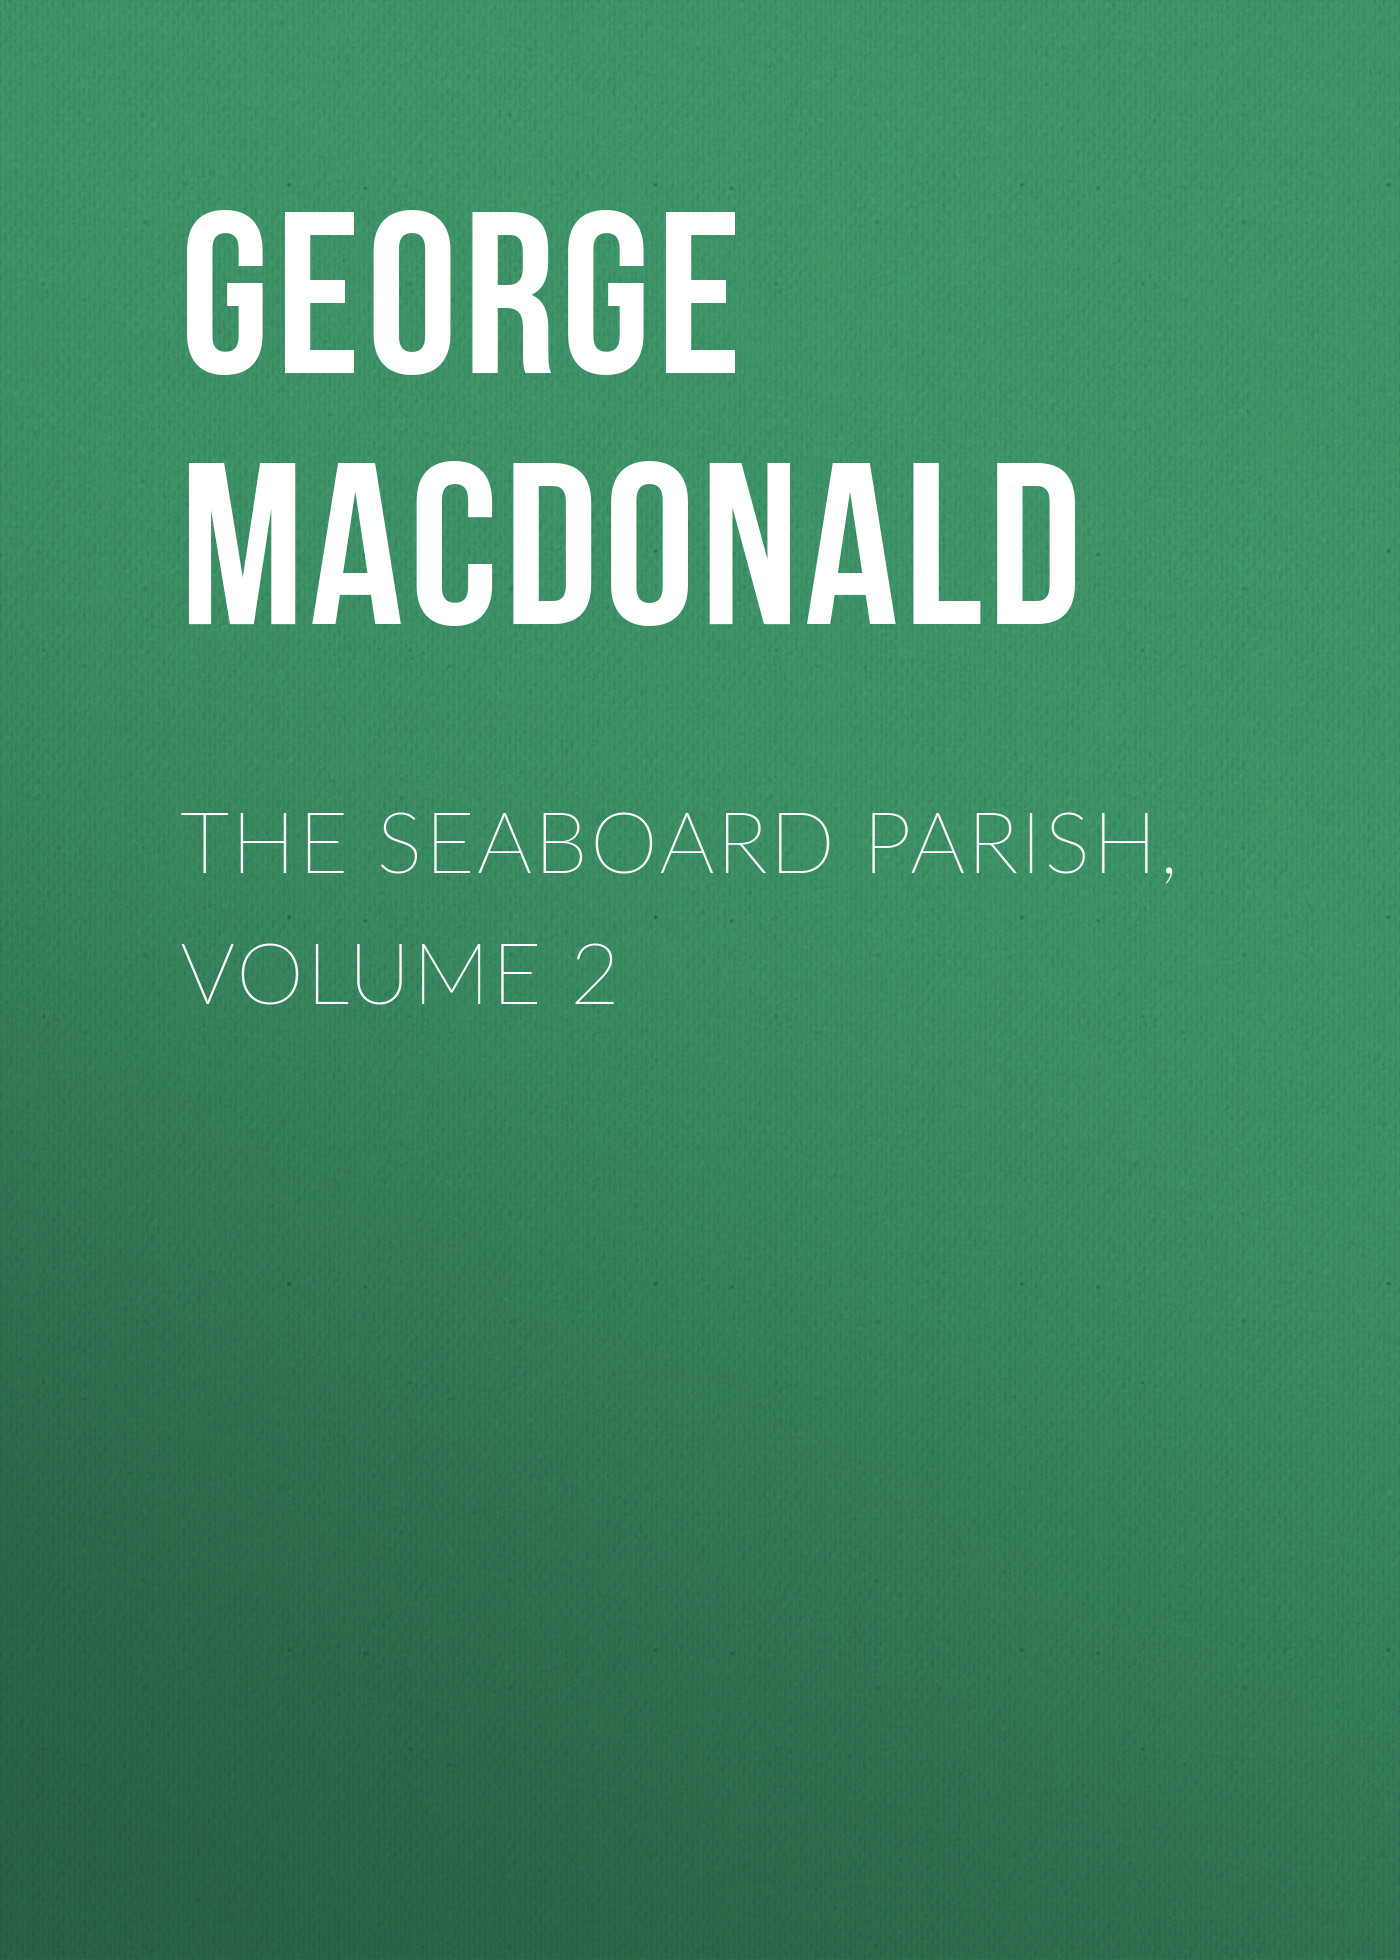 The Seaboard Parish, Volume 2